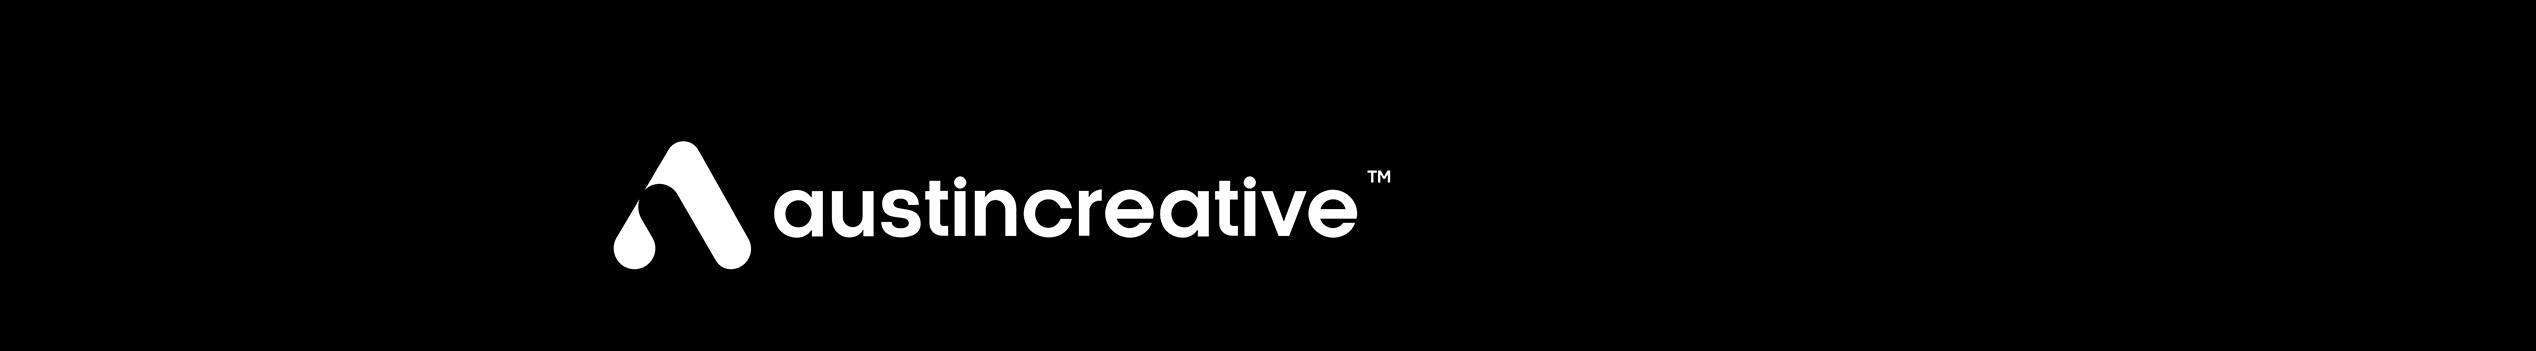 Austin Creative's profile banner